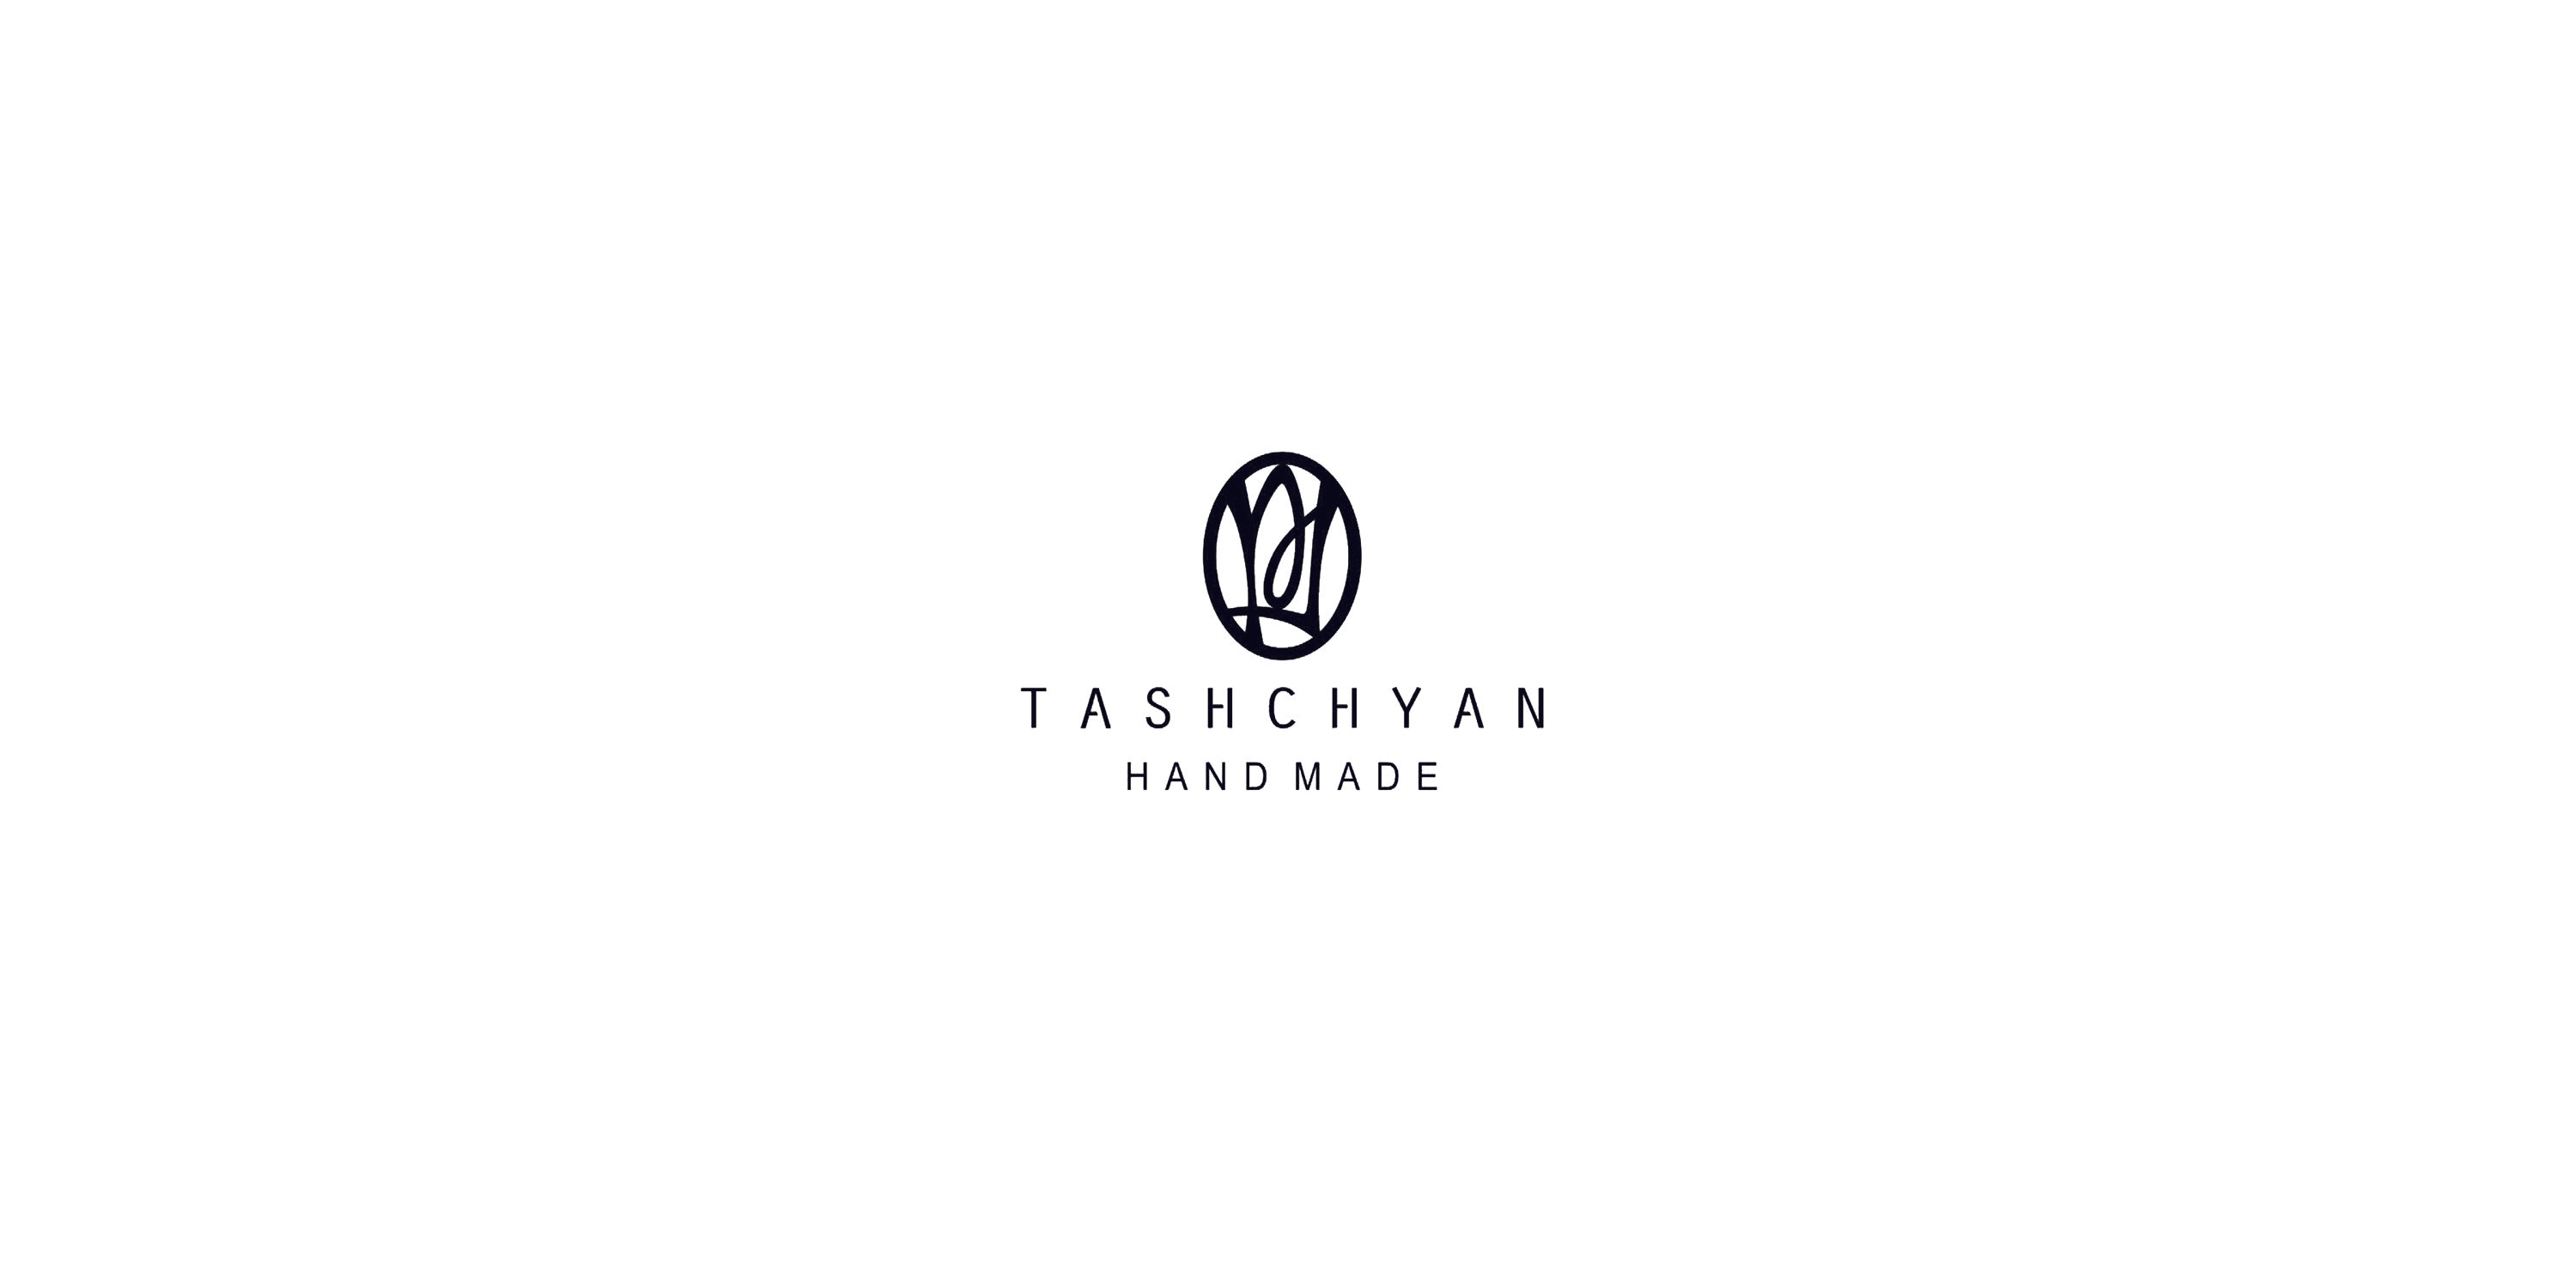 Tashchyan logo